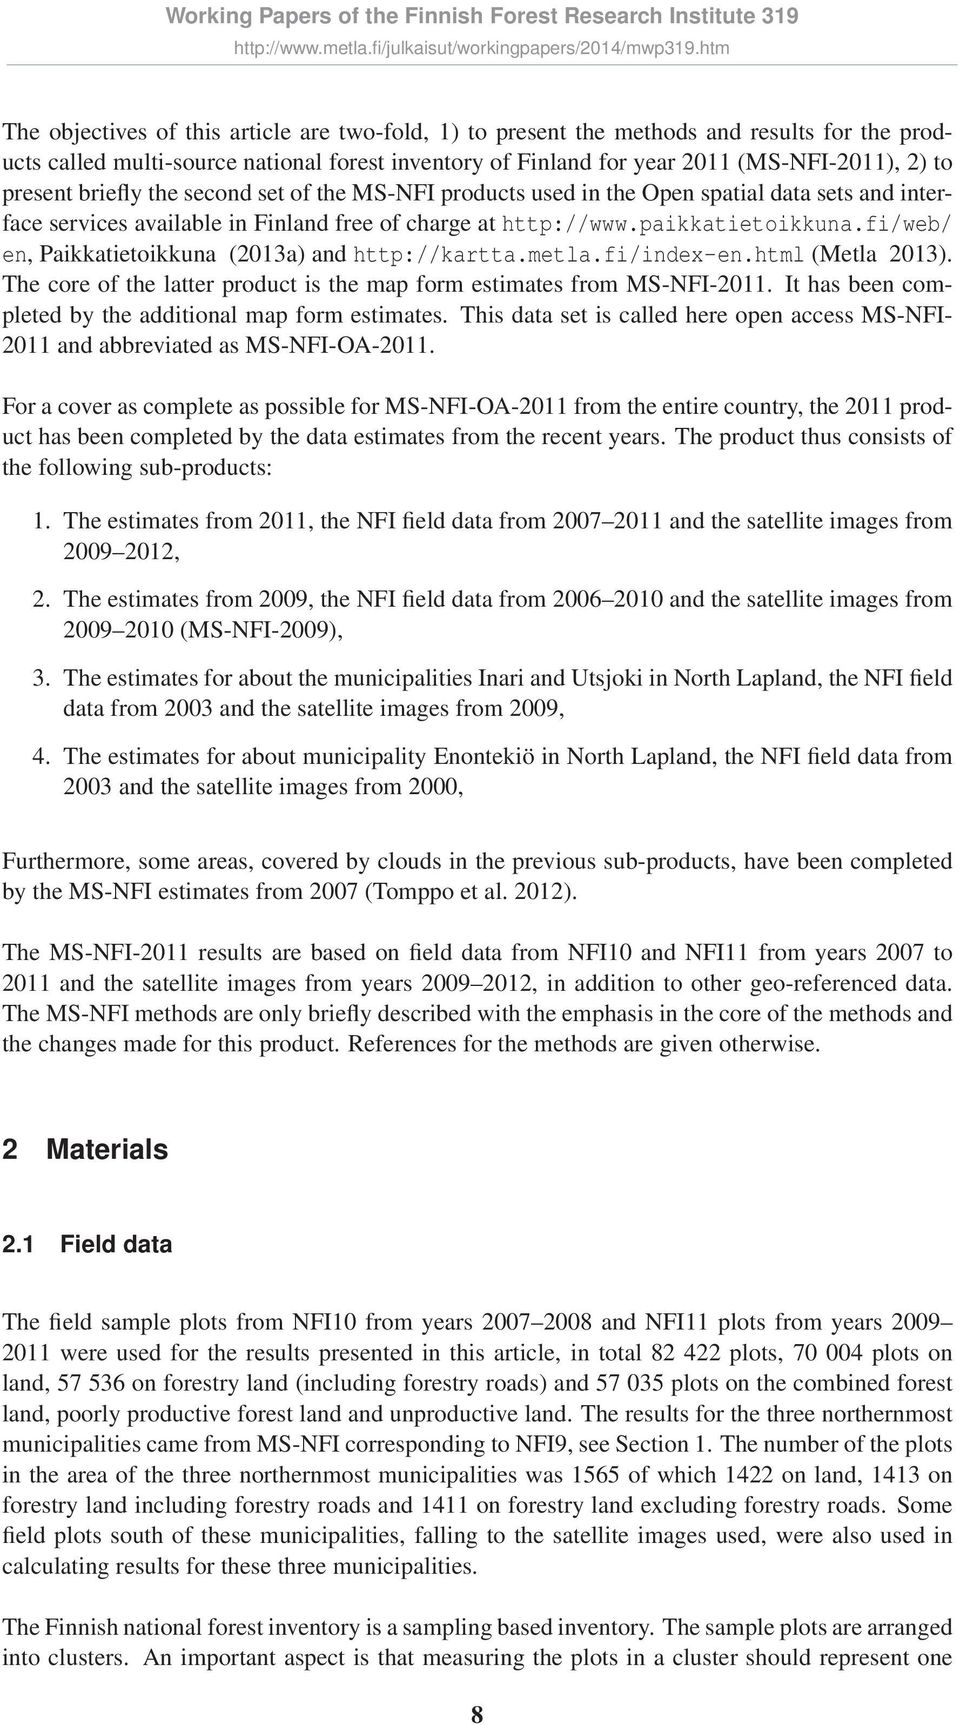 fi/web/ en, Paikkatietoikkuna (2013a) and http://kartta.metla.fi/index-en.html (Metla 2013). The core of the latter product is the map form estimates from MS-NFI-2011.